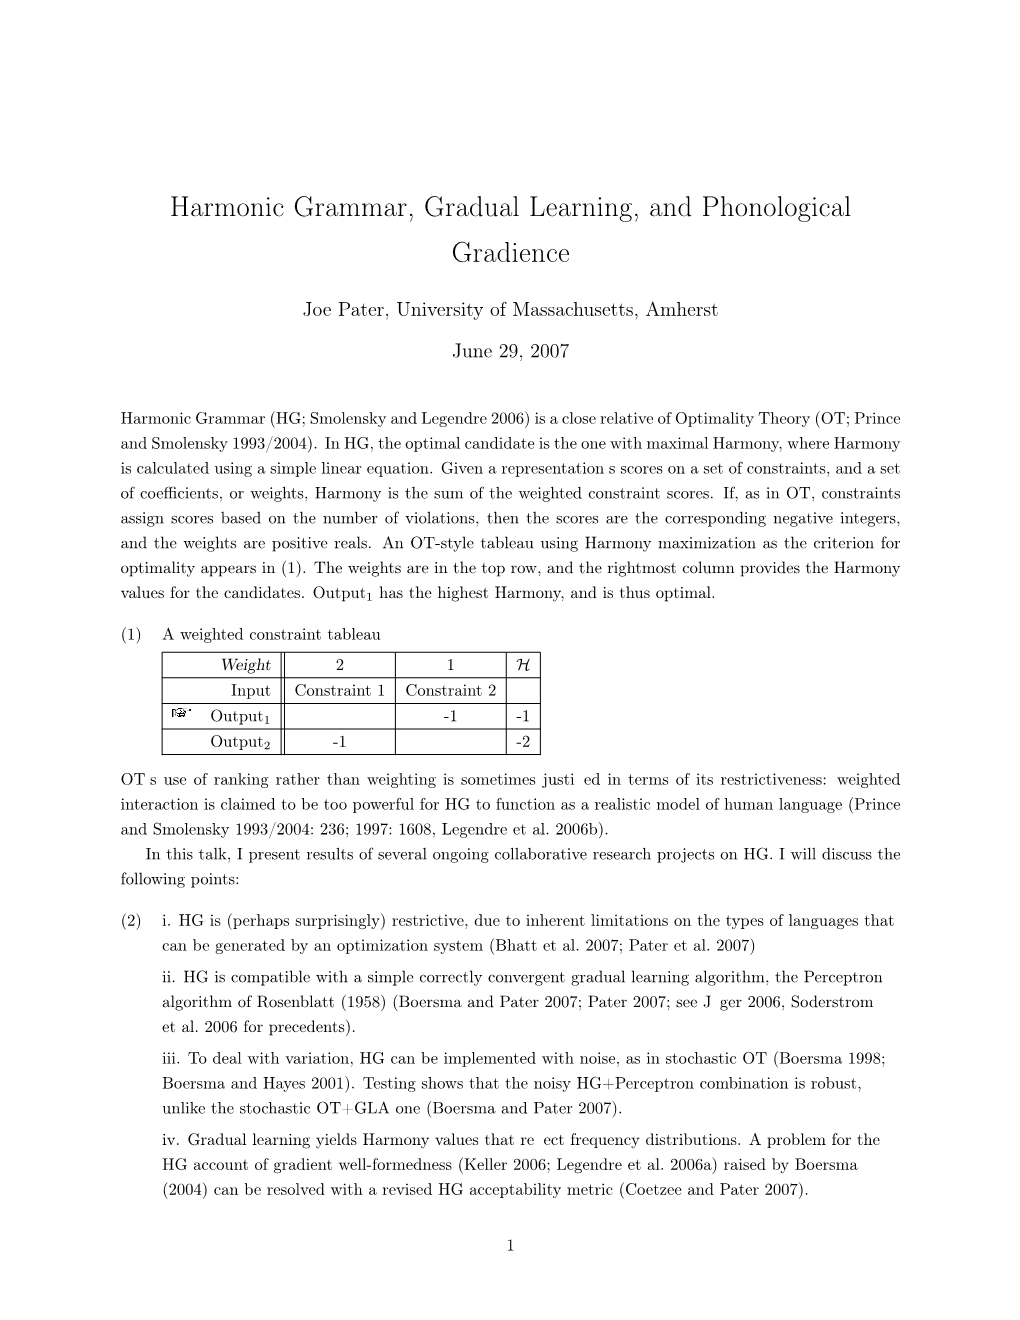 Harmonic Grammar, Gradual Learning, and Phonological Gradience